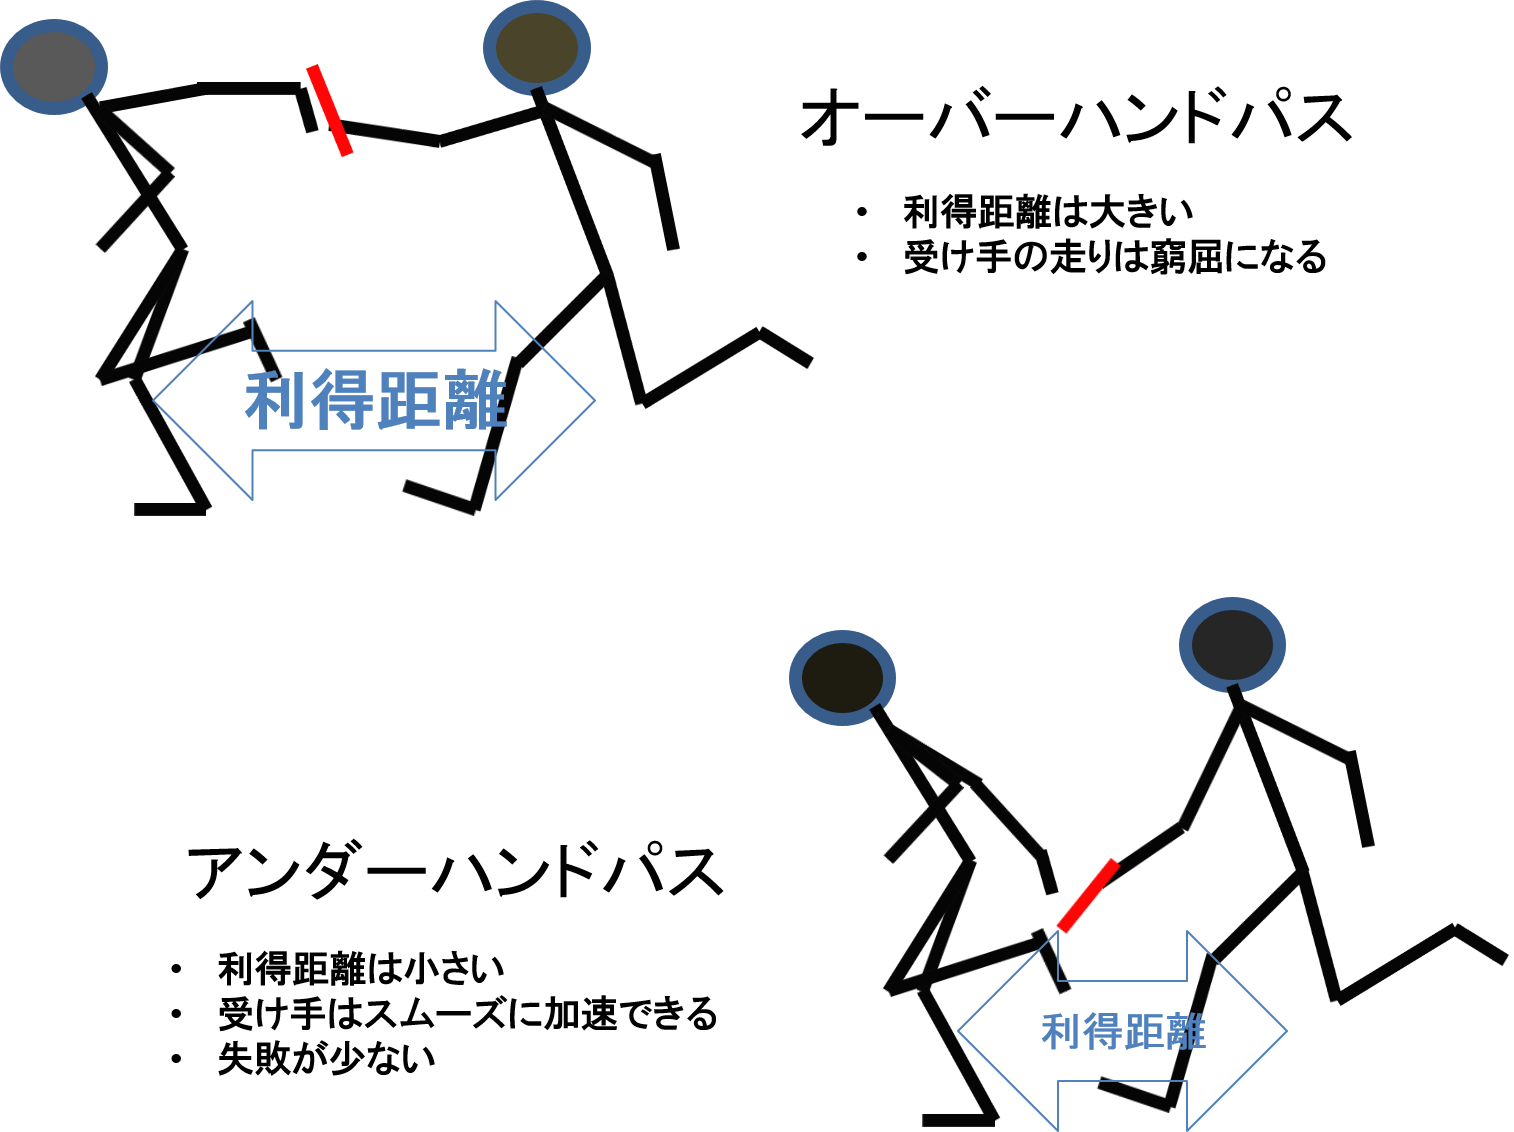 4 100mリレー 4継 のバトンパス意識と練習方法 陸上競技の理論と実践